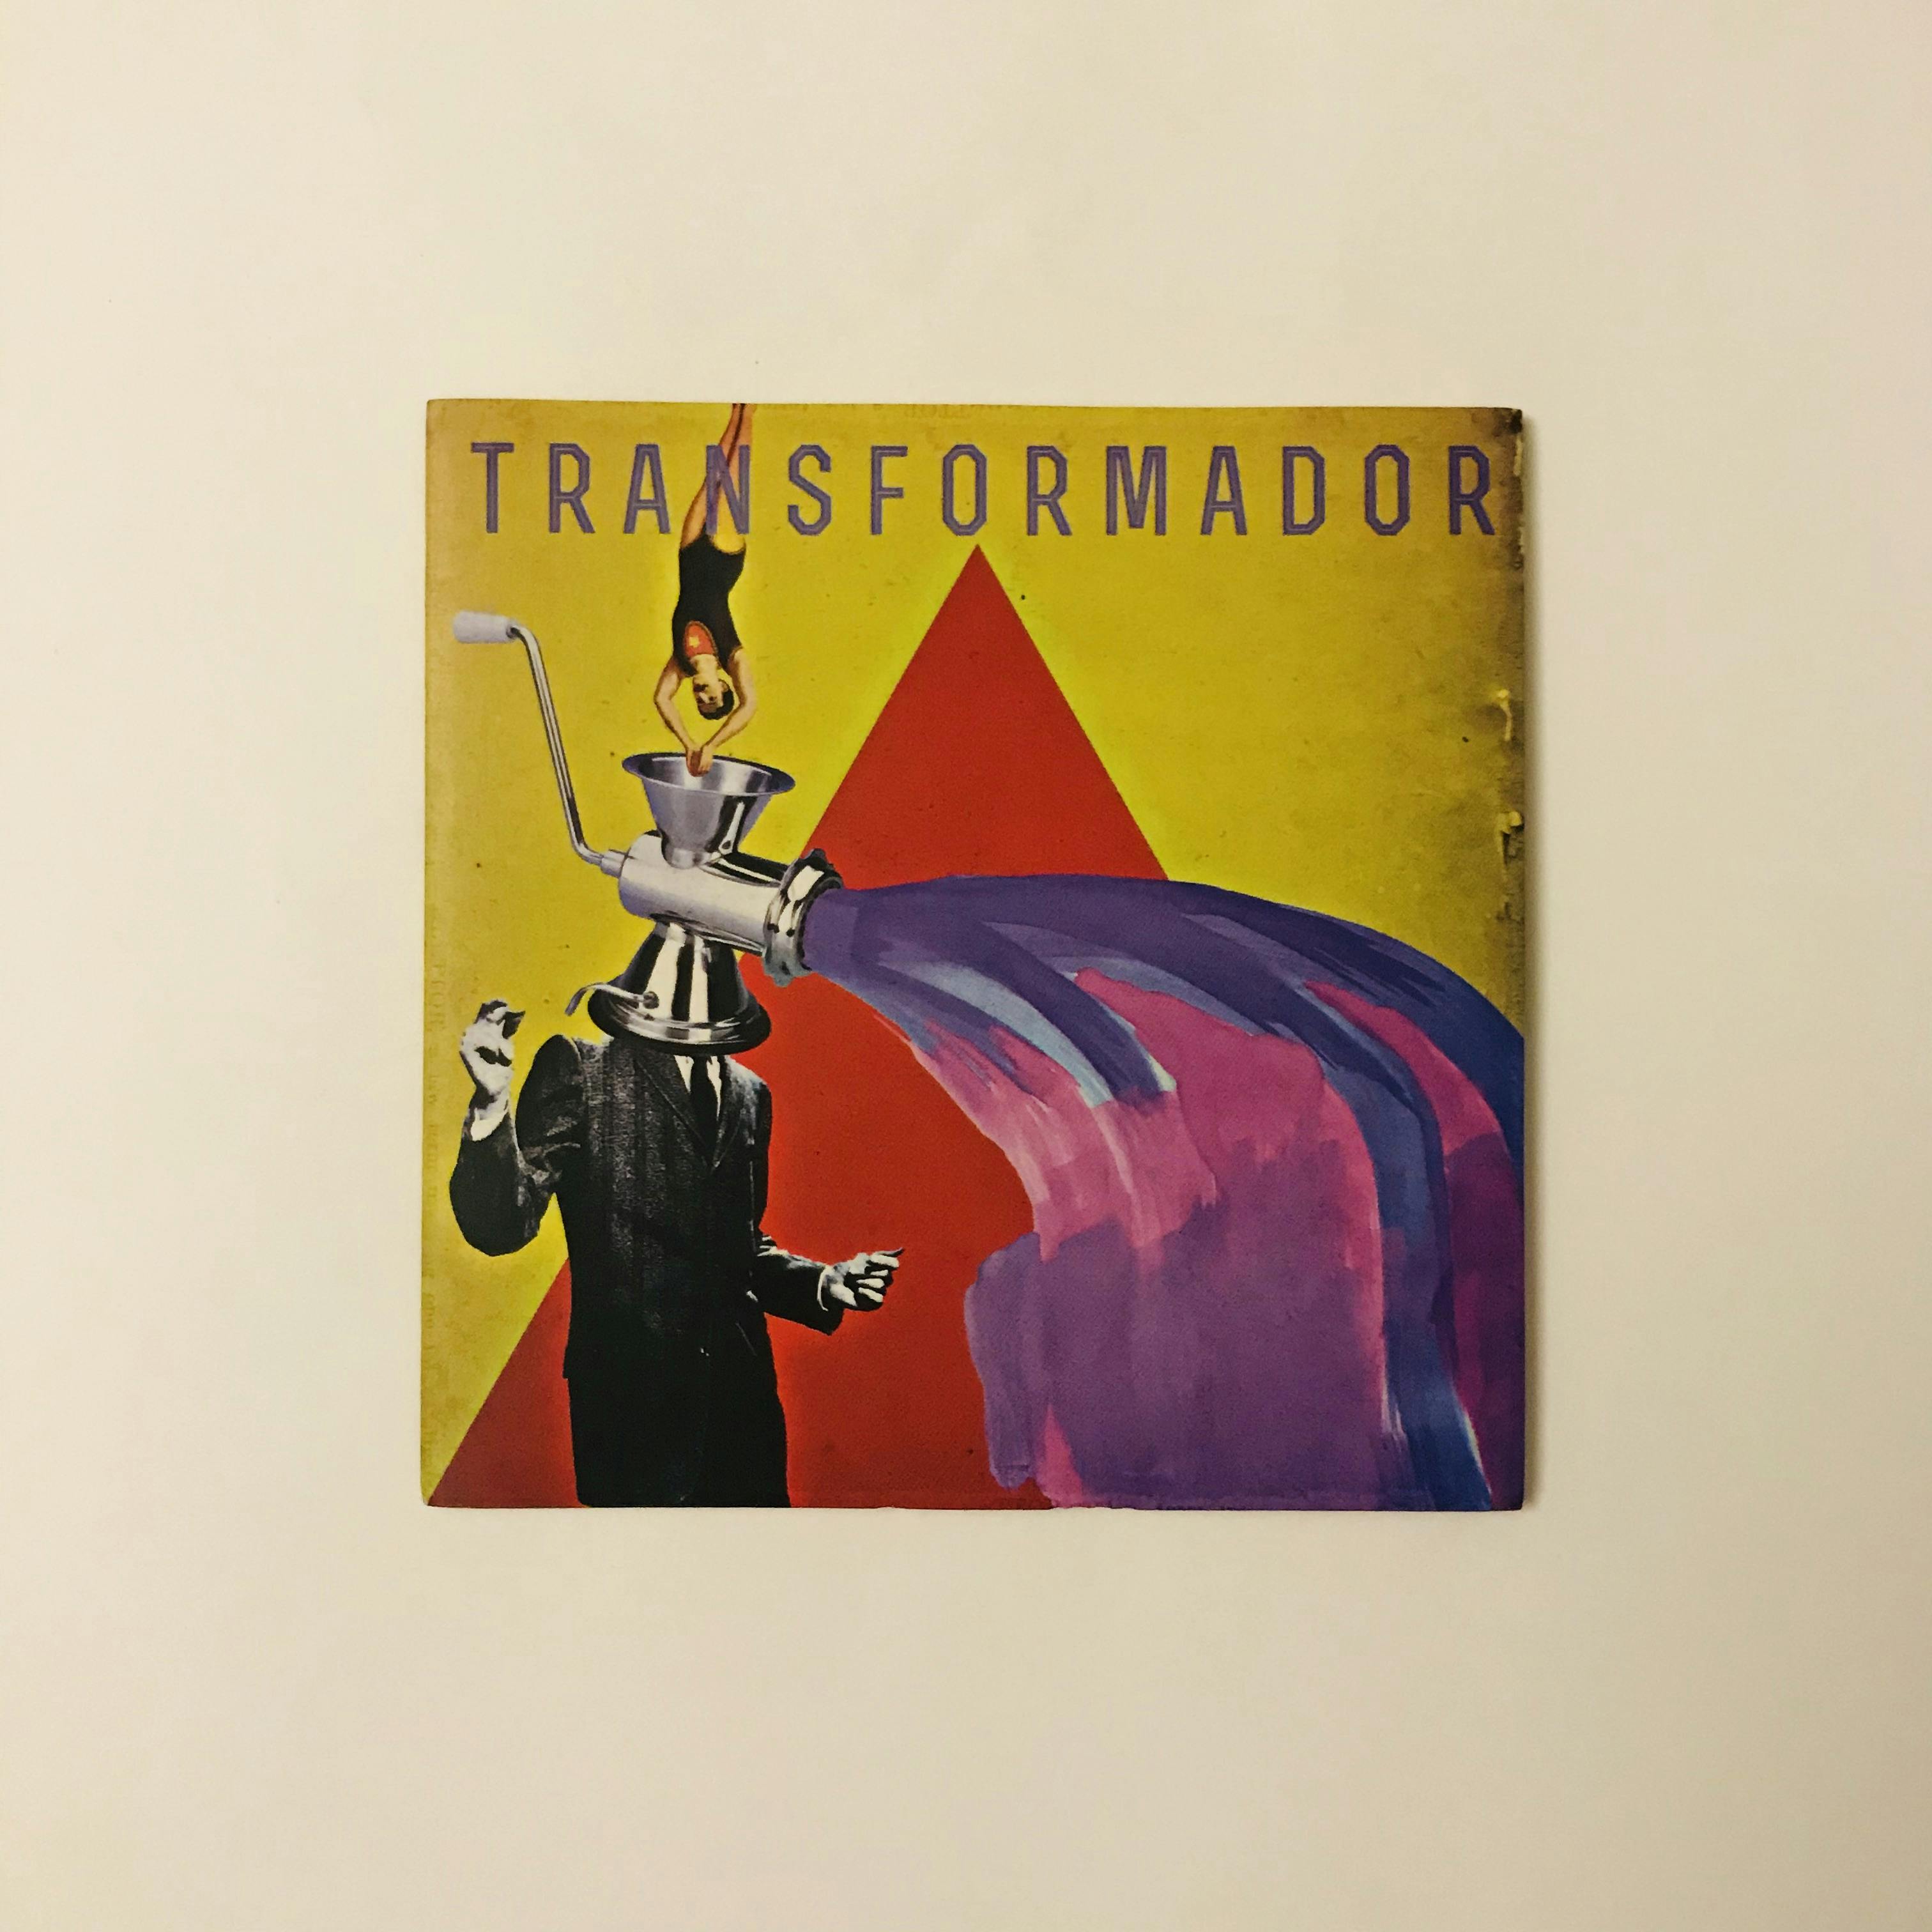 "TRANSFORMADOR", CD de Transformador